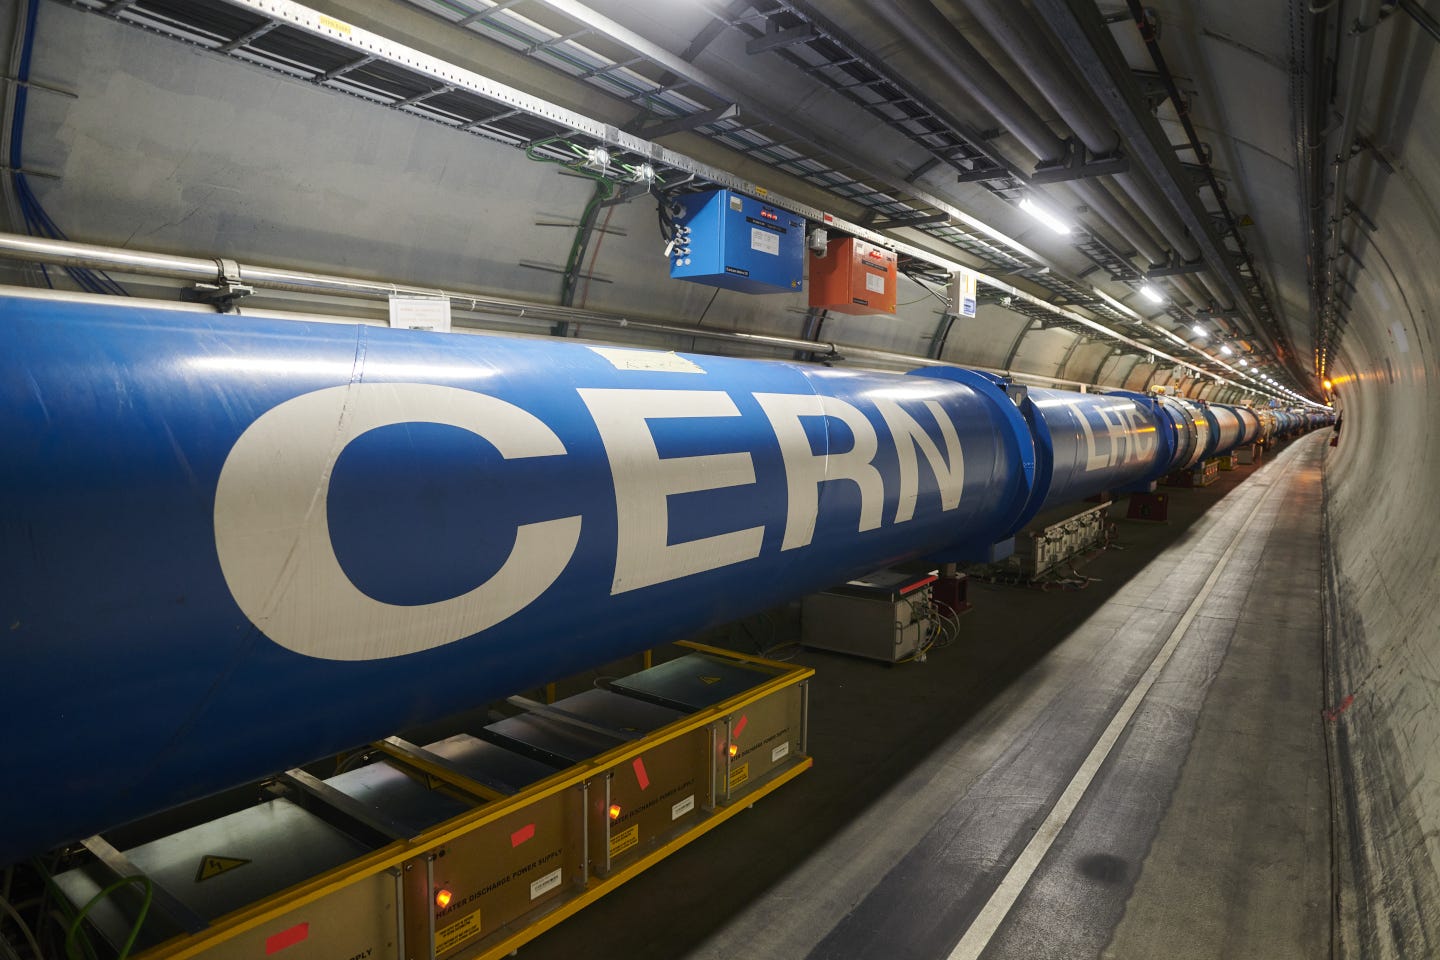 https://cds.cern.ch/images/CERN-PHOTO-202109-138-5/file?size=large